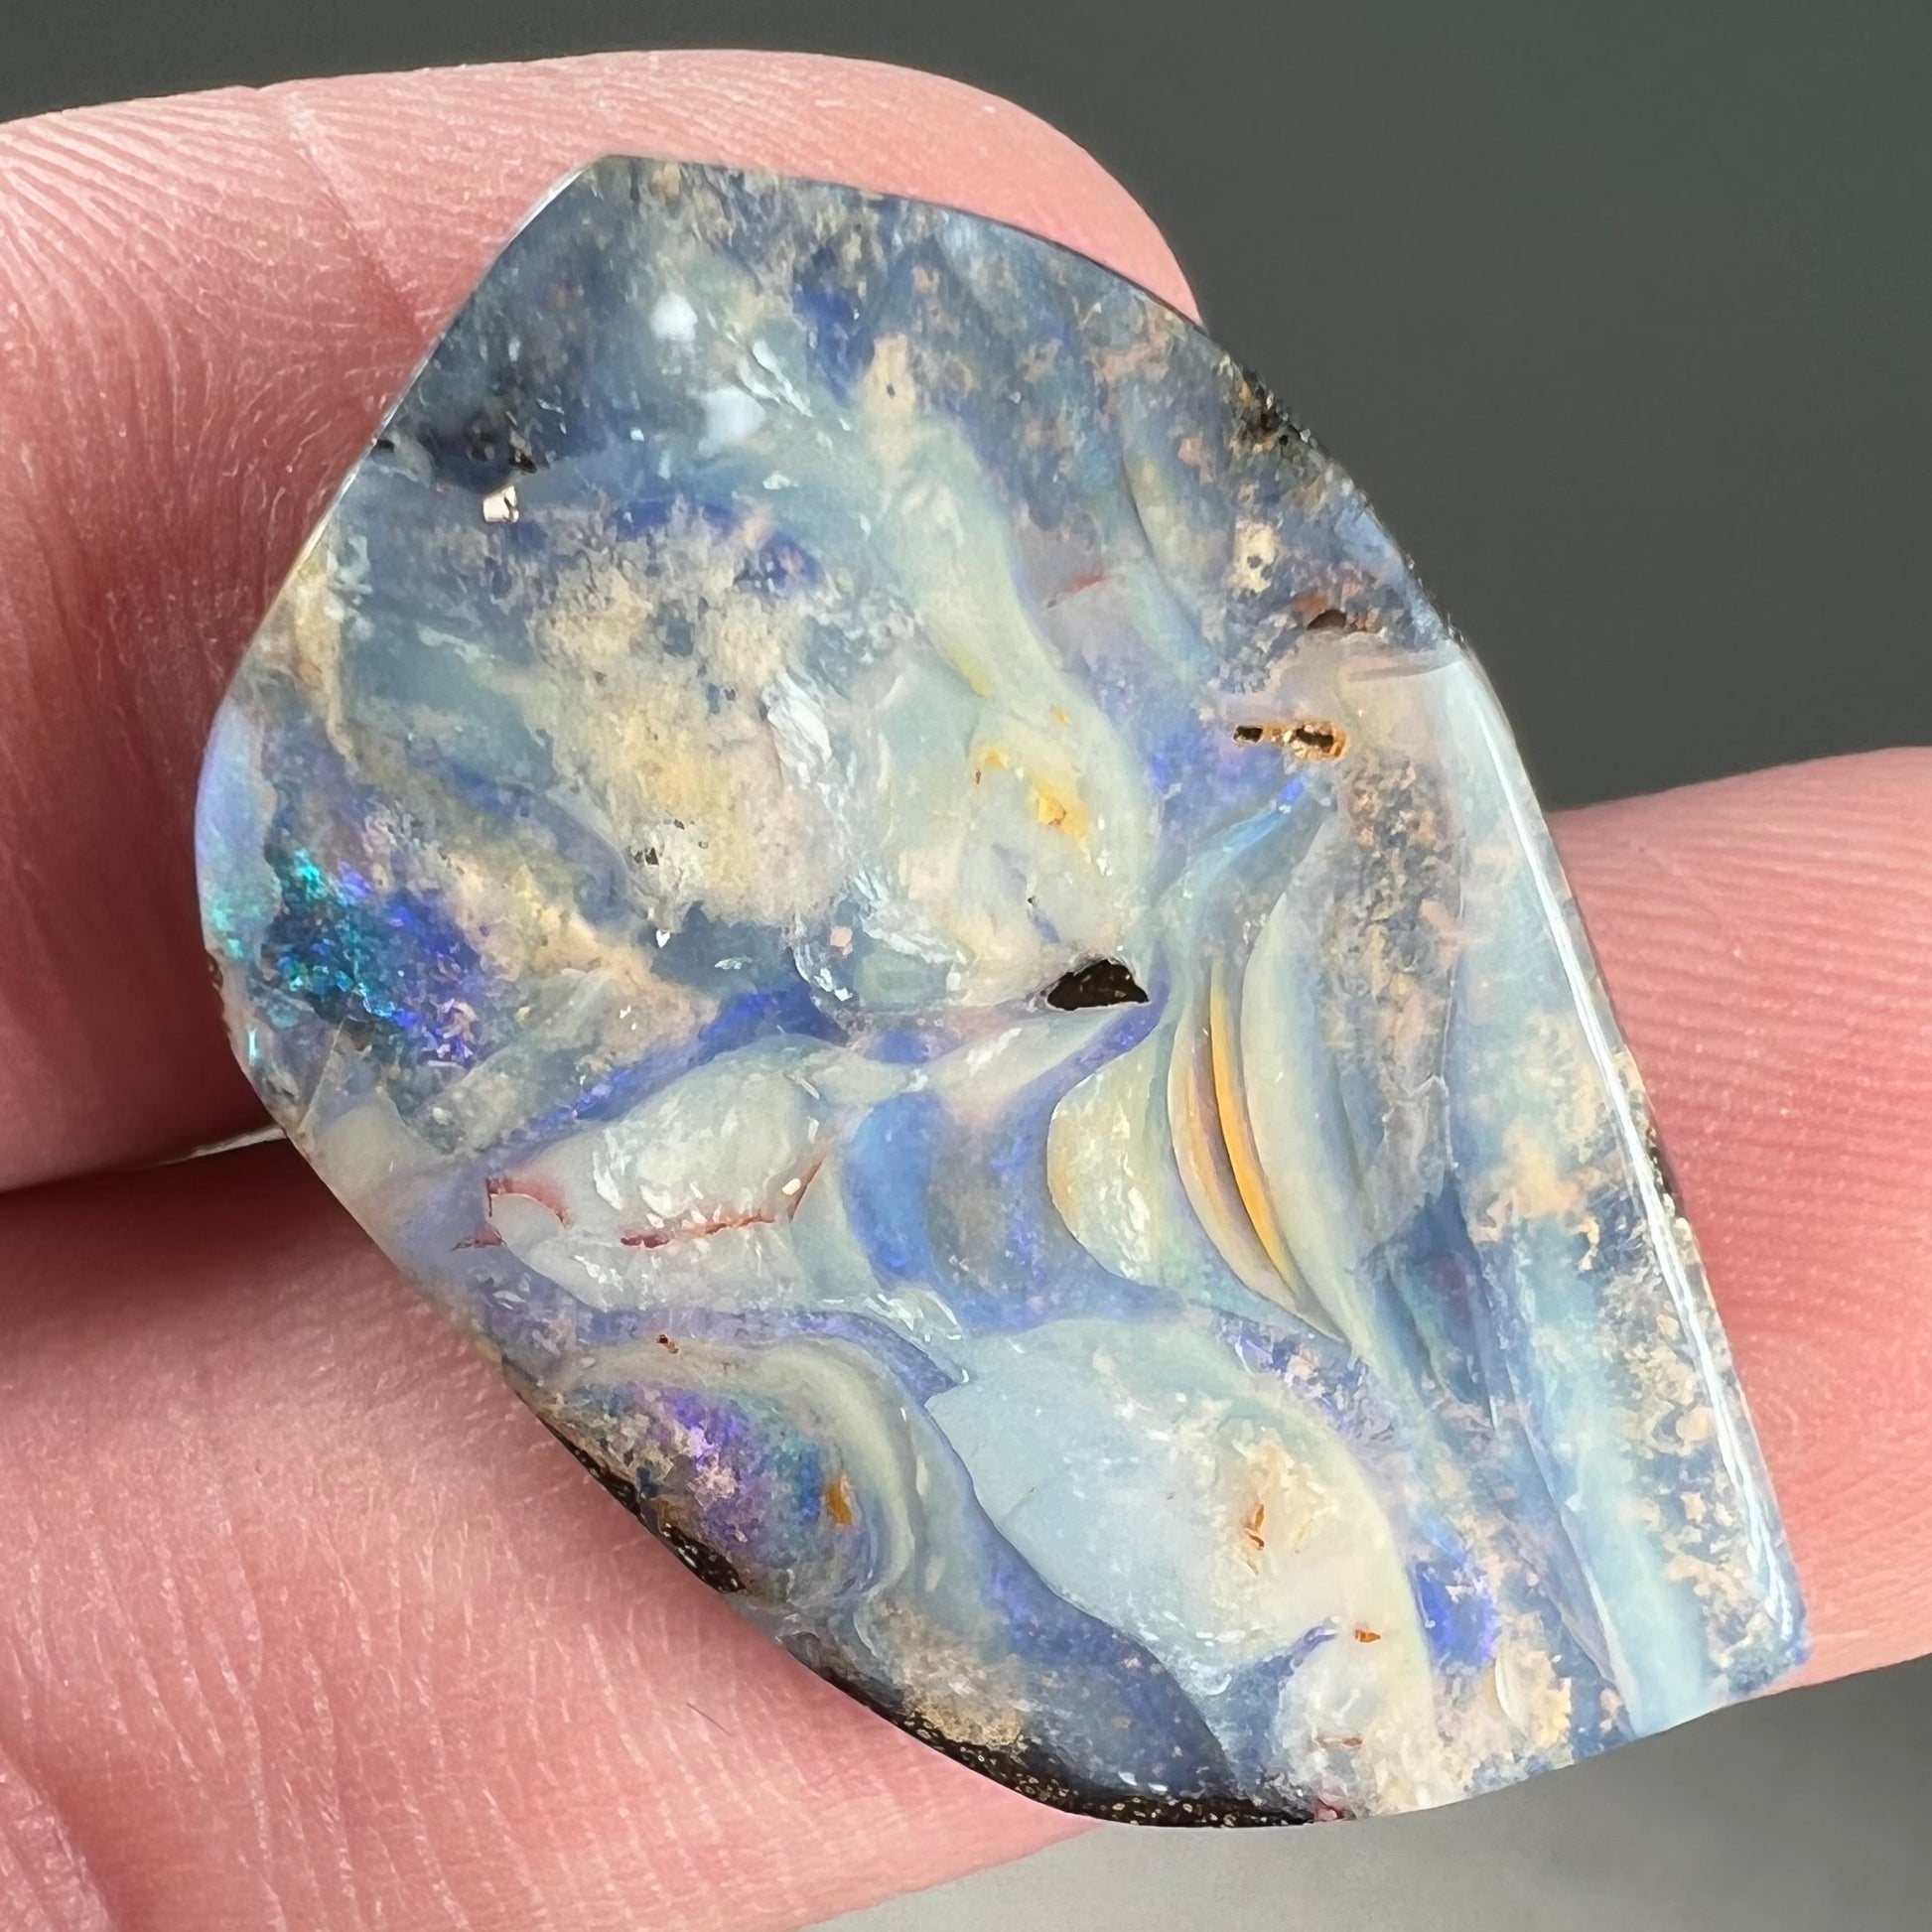 A loose, polished, freeform cut boulder opal stone from Queensland, Australia.